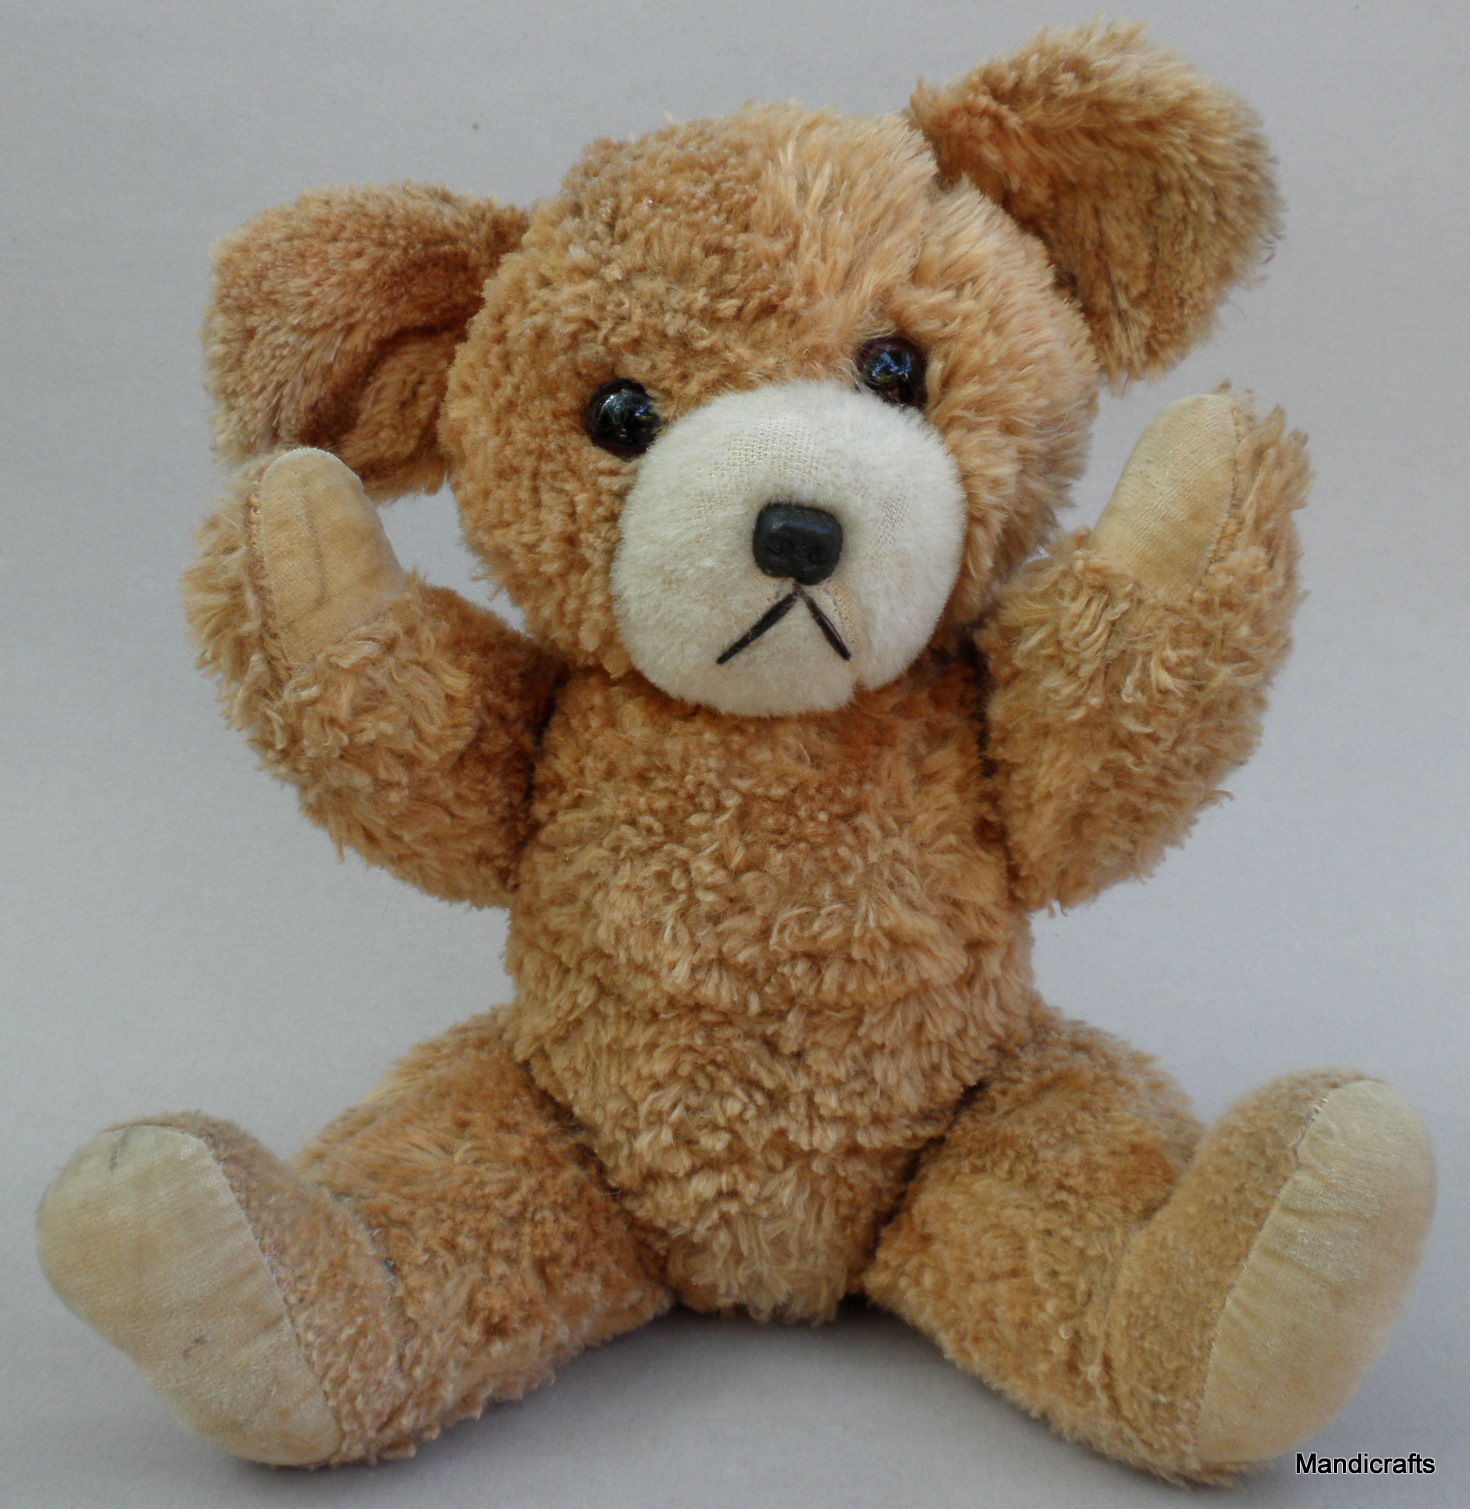 Mandicrafts News & Views - Teddy Bears & Collectibles: Antique